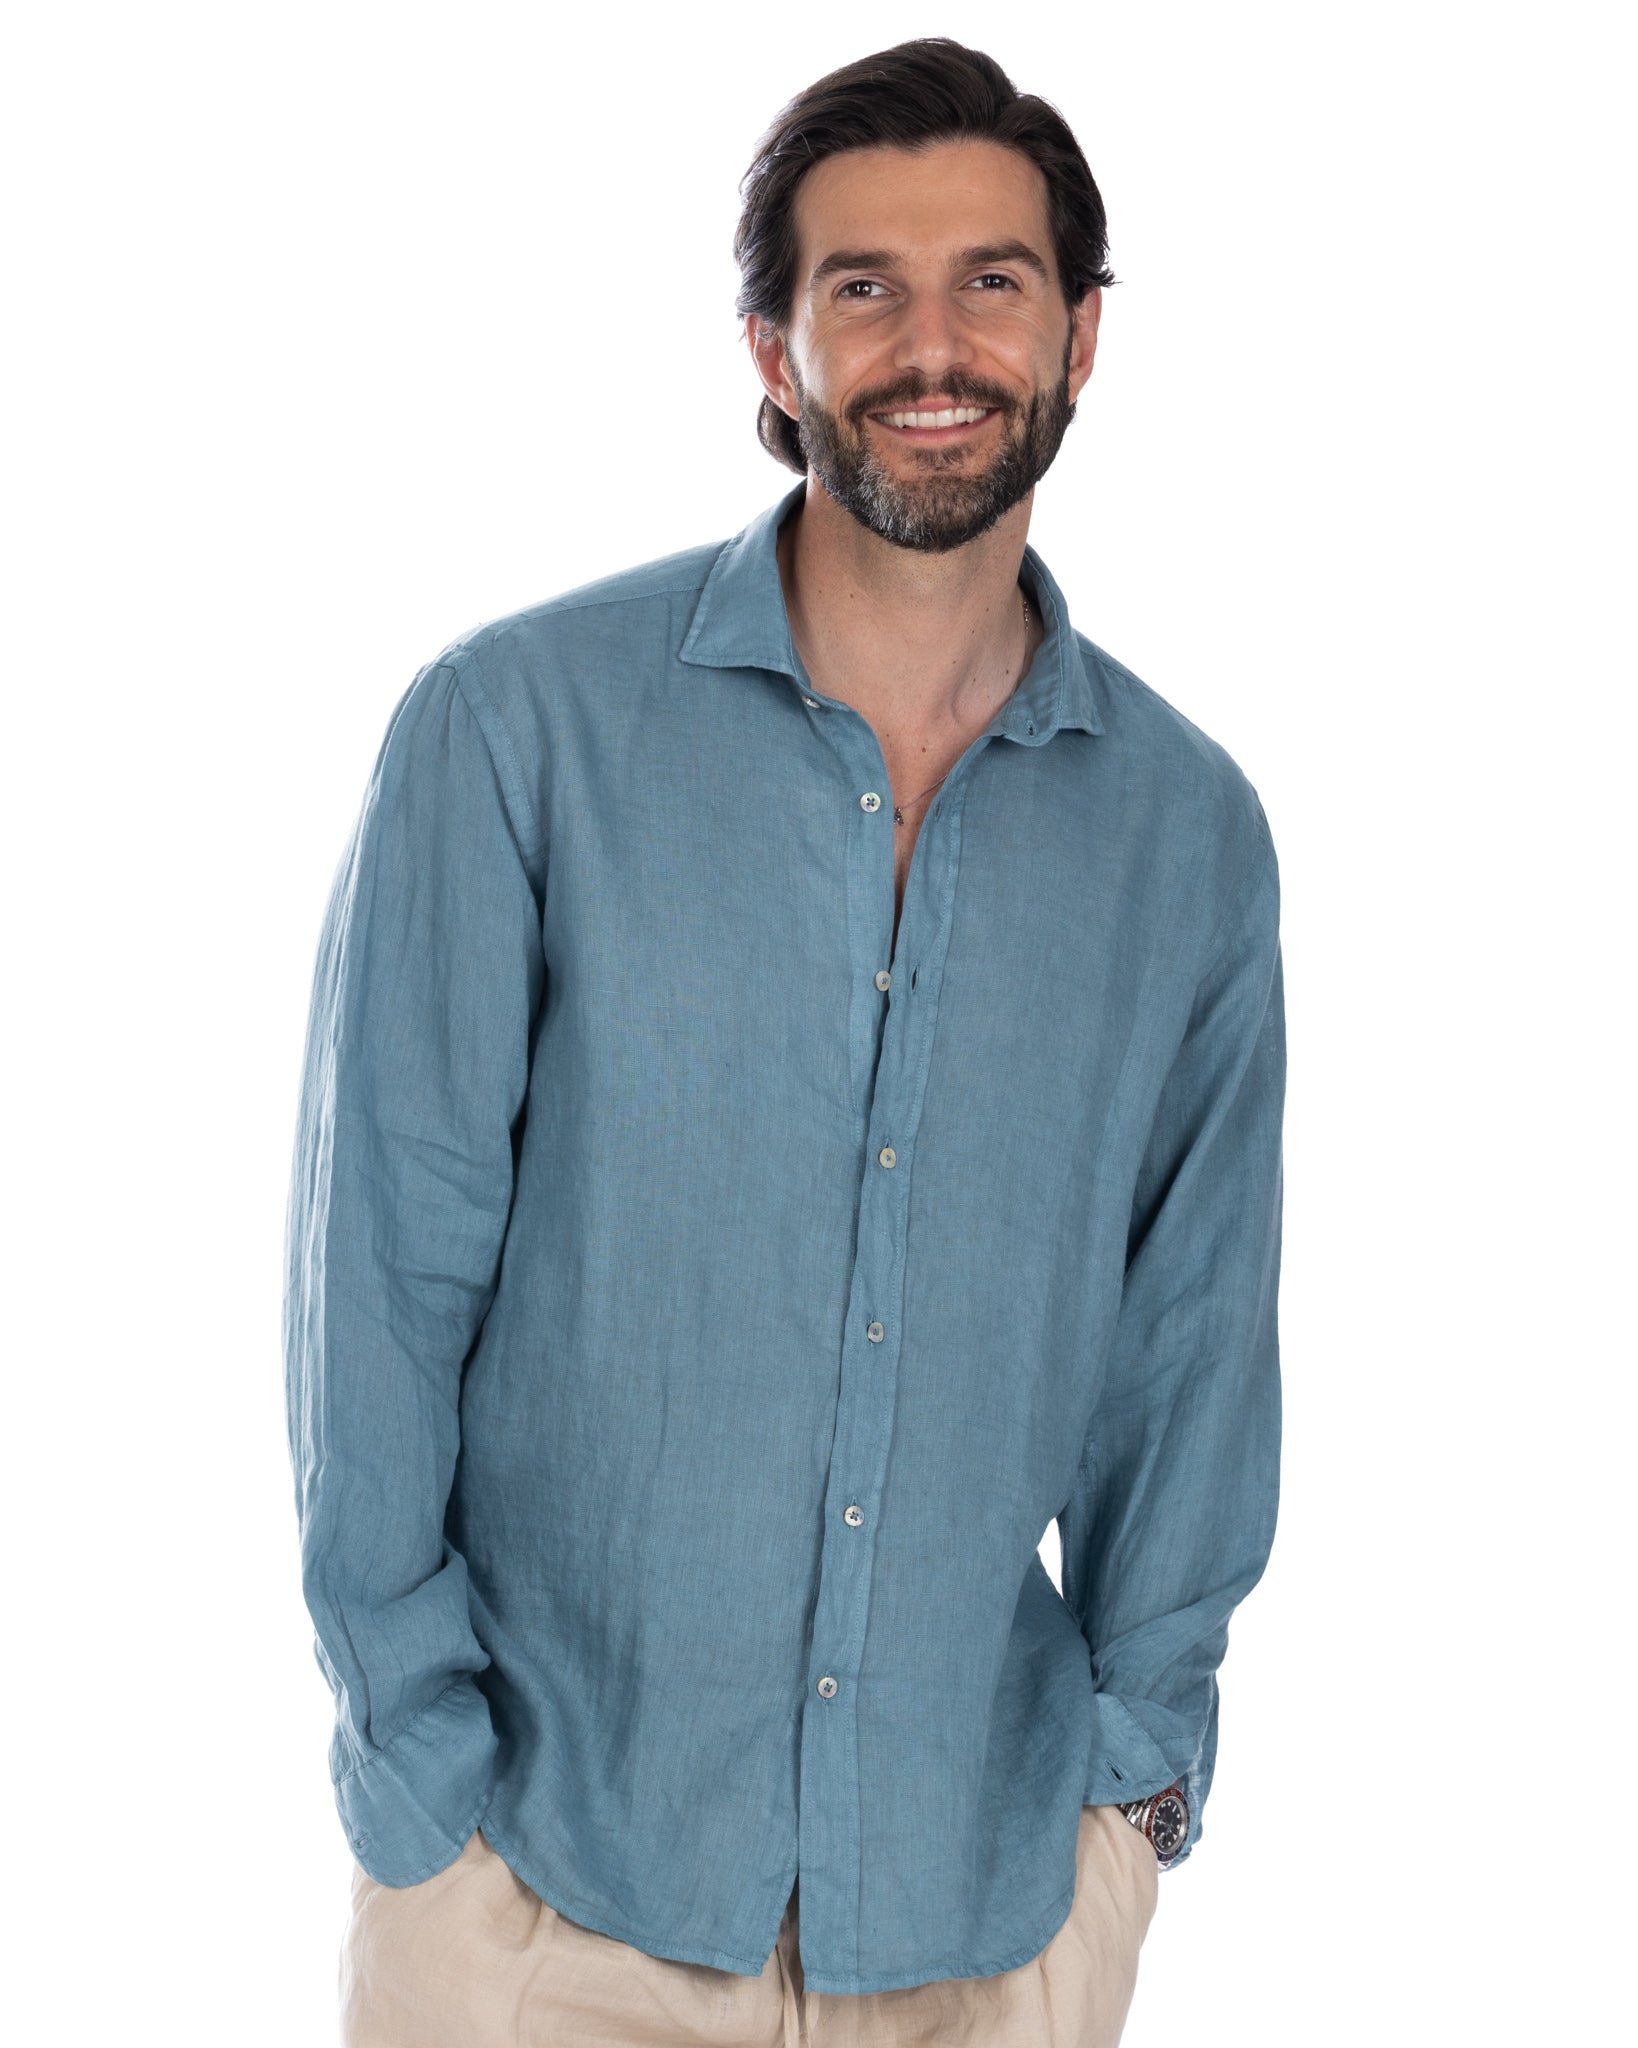 Montecarlo - pure teal linen shirt